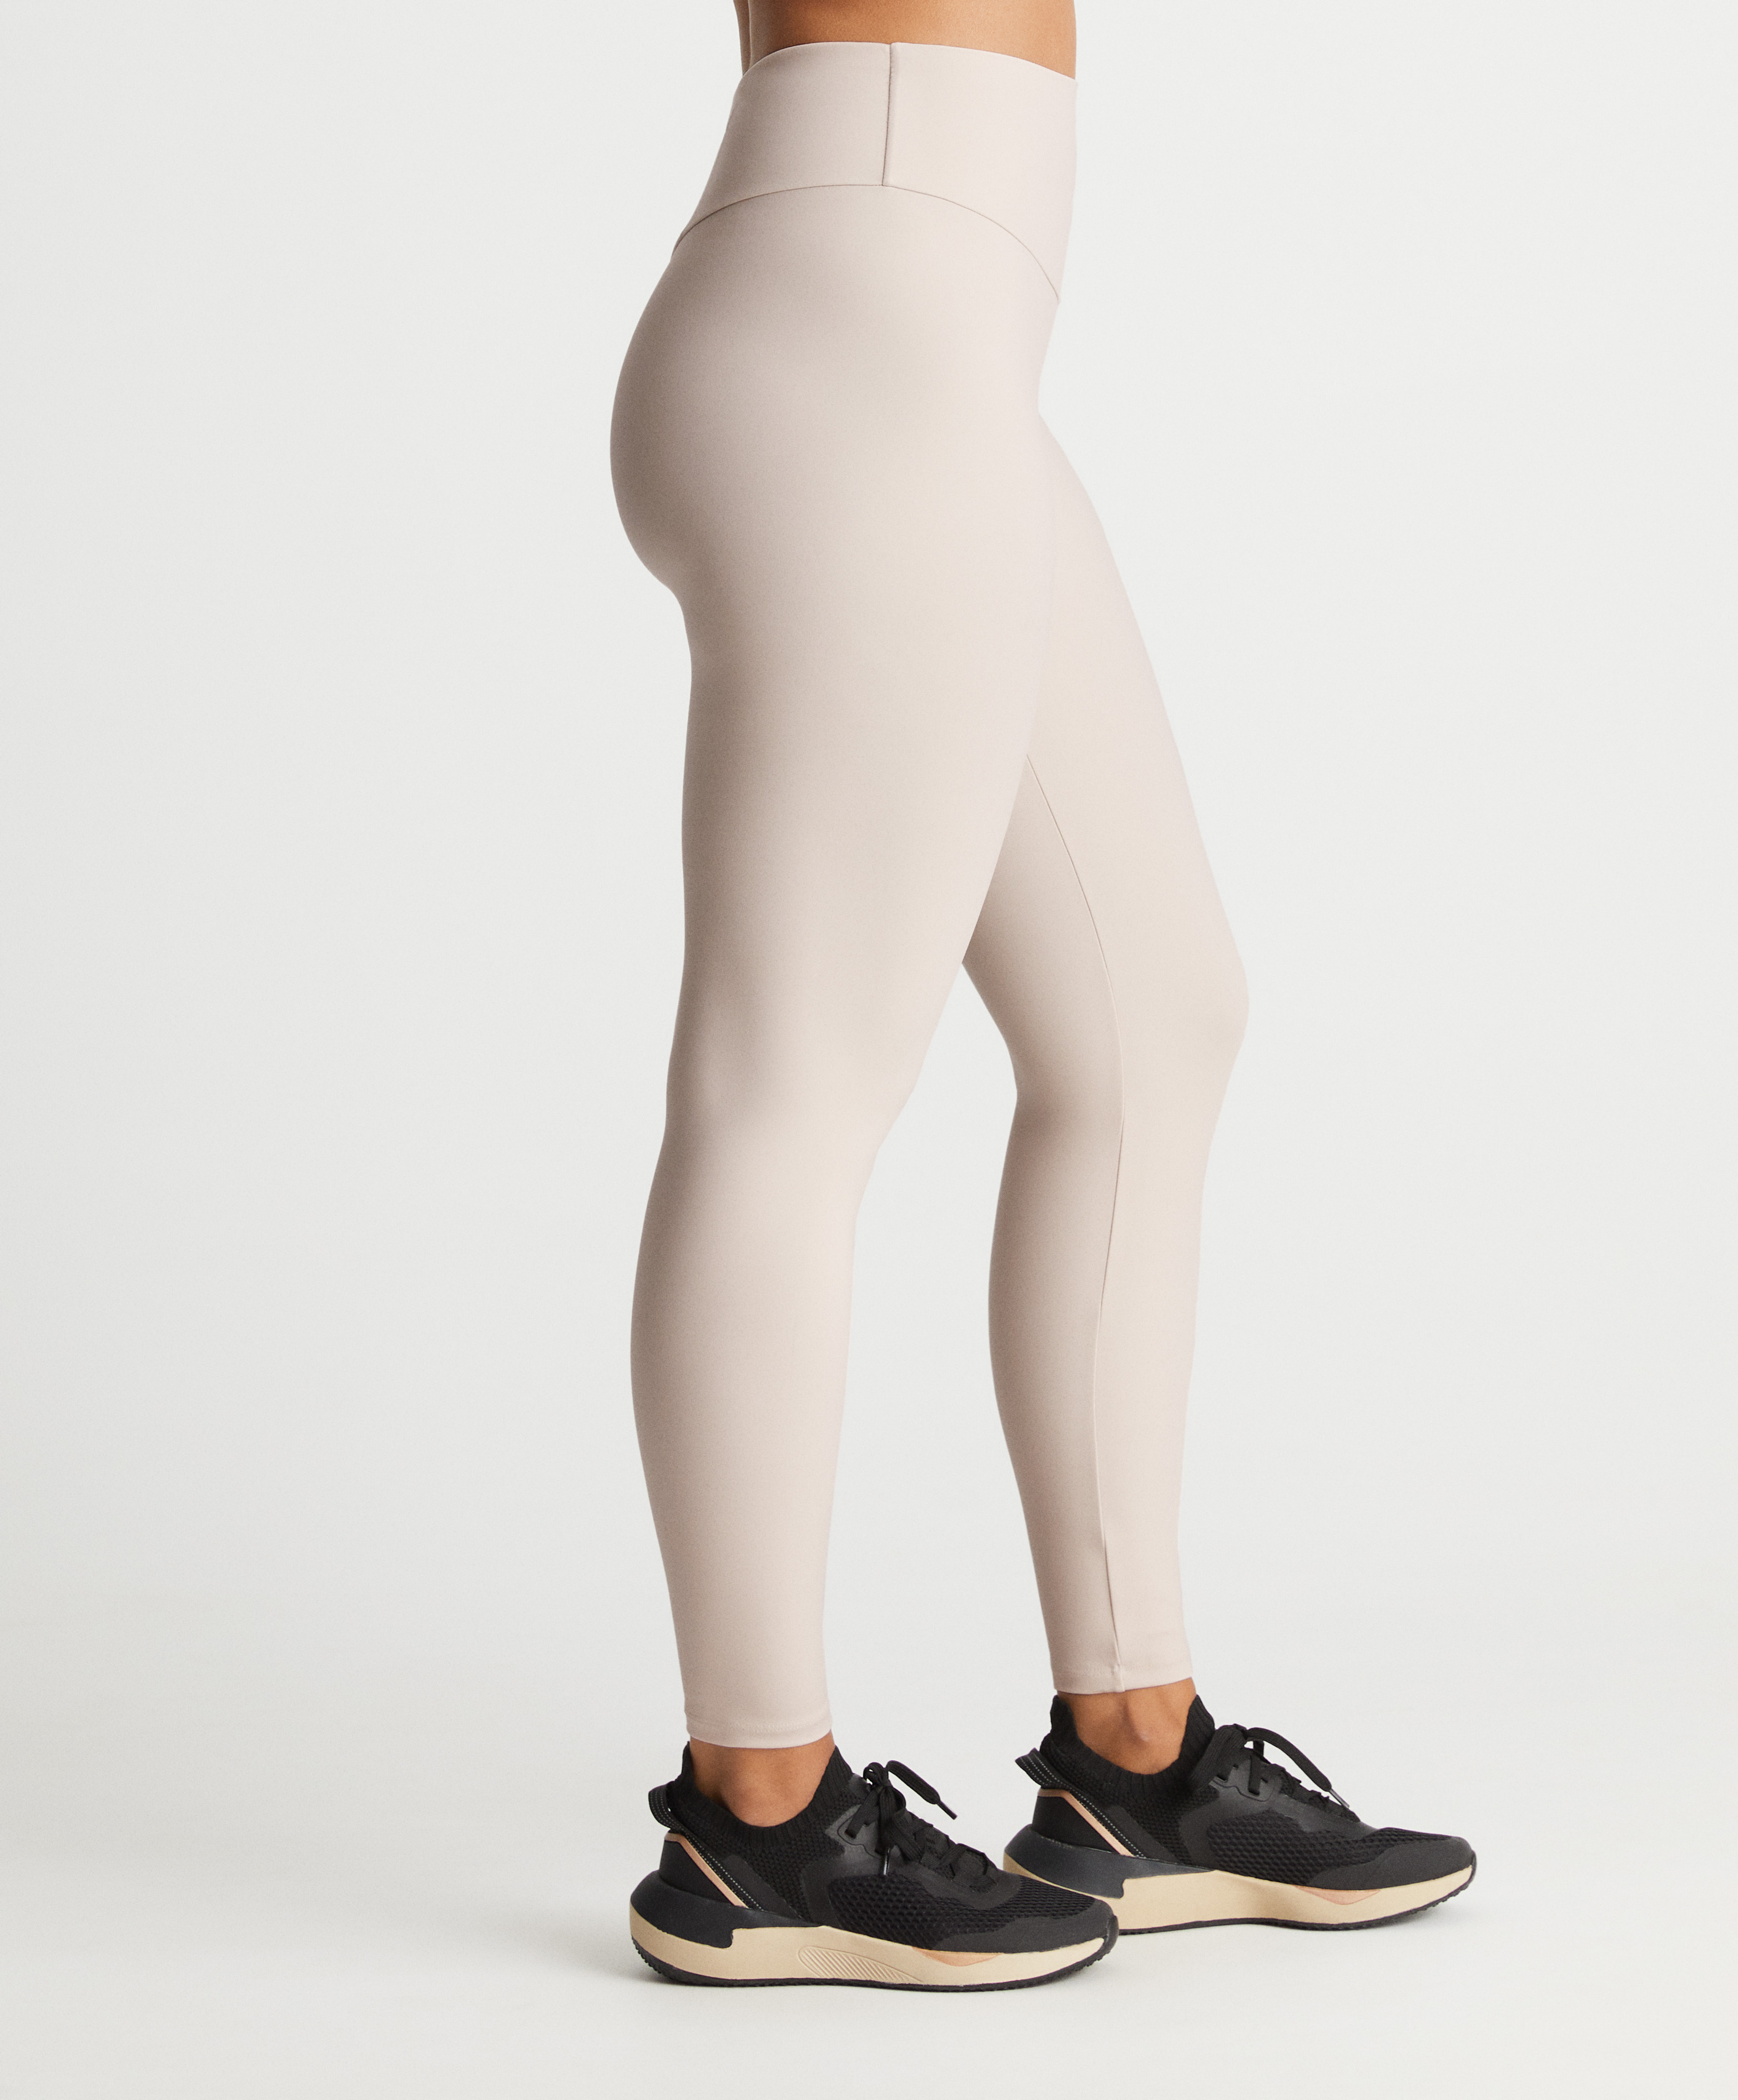 Ankellange leggings, high rise, comfortlux, 65 cm